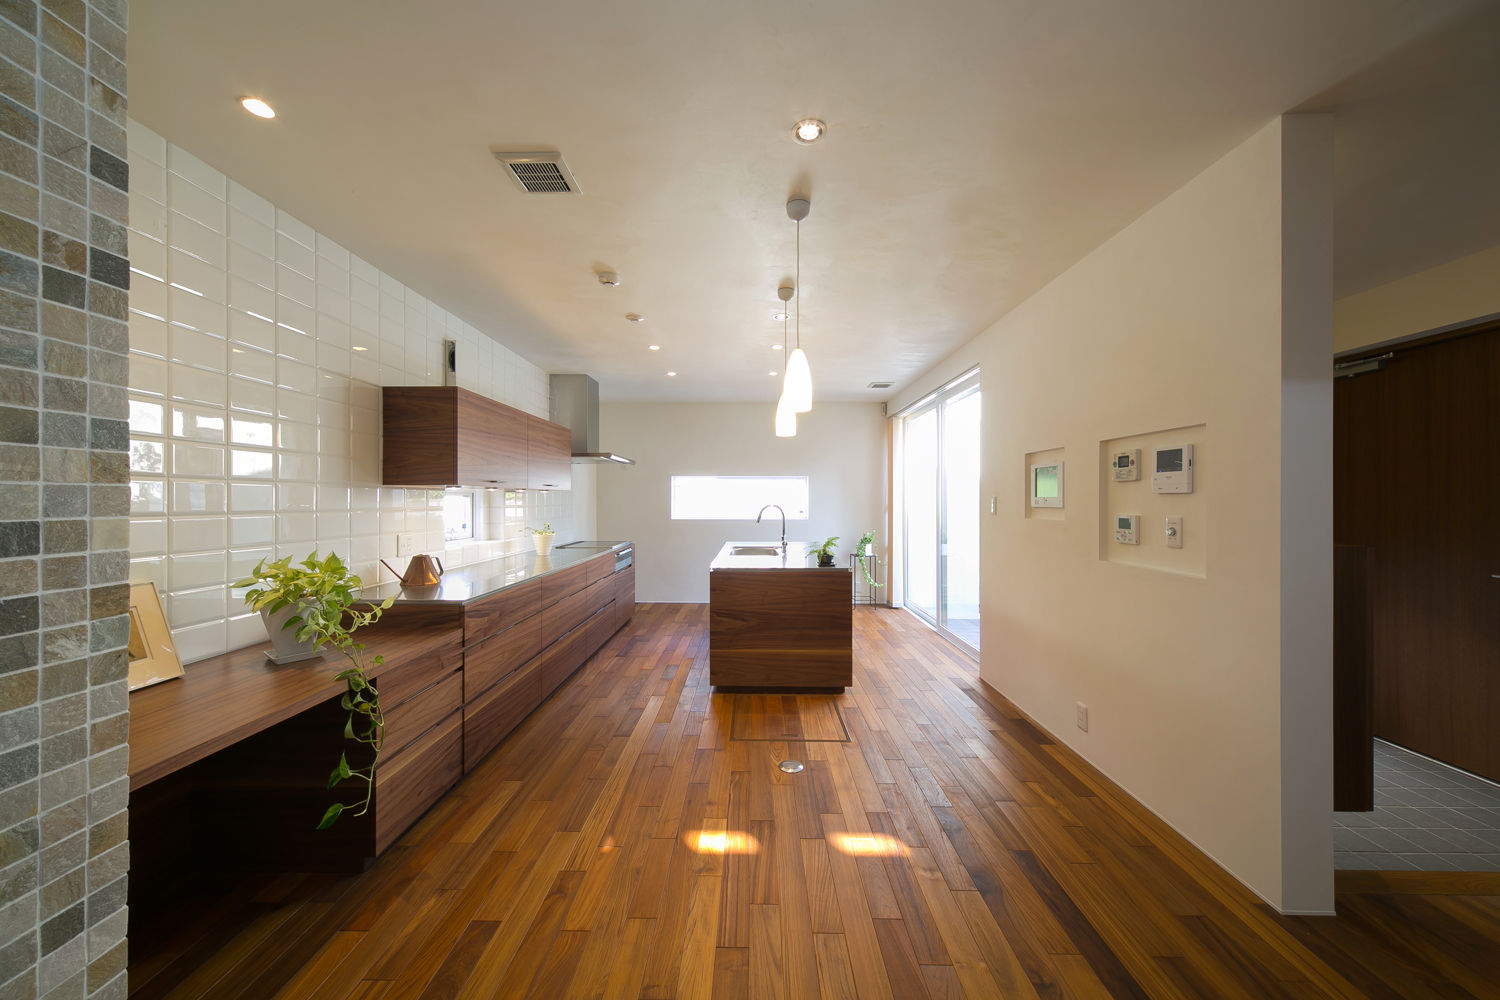 sunny side, アーキシップス京都 アーキシップス京都 Modern style kitchen Wood Wood effect